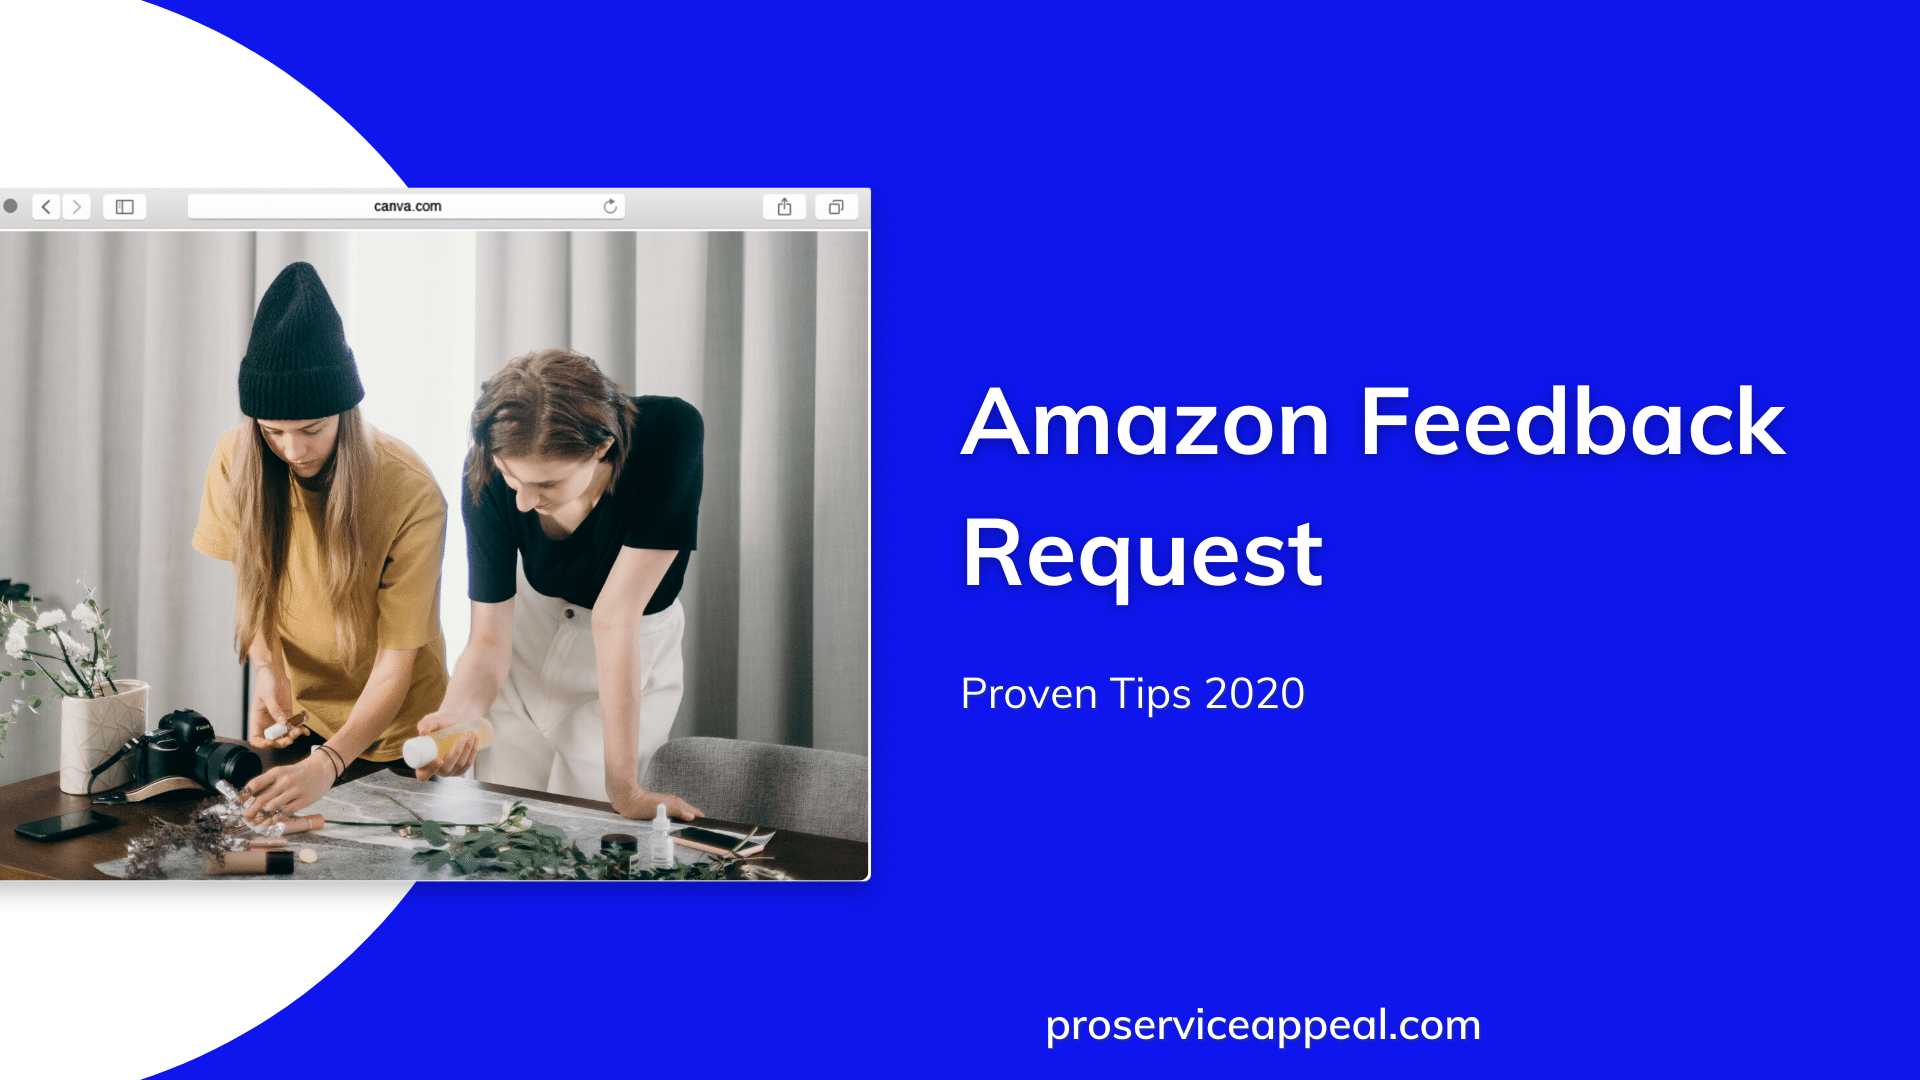 Amazon Feedback Request: Proven Tips 2020